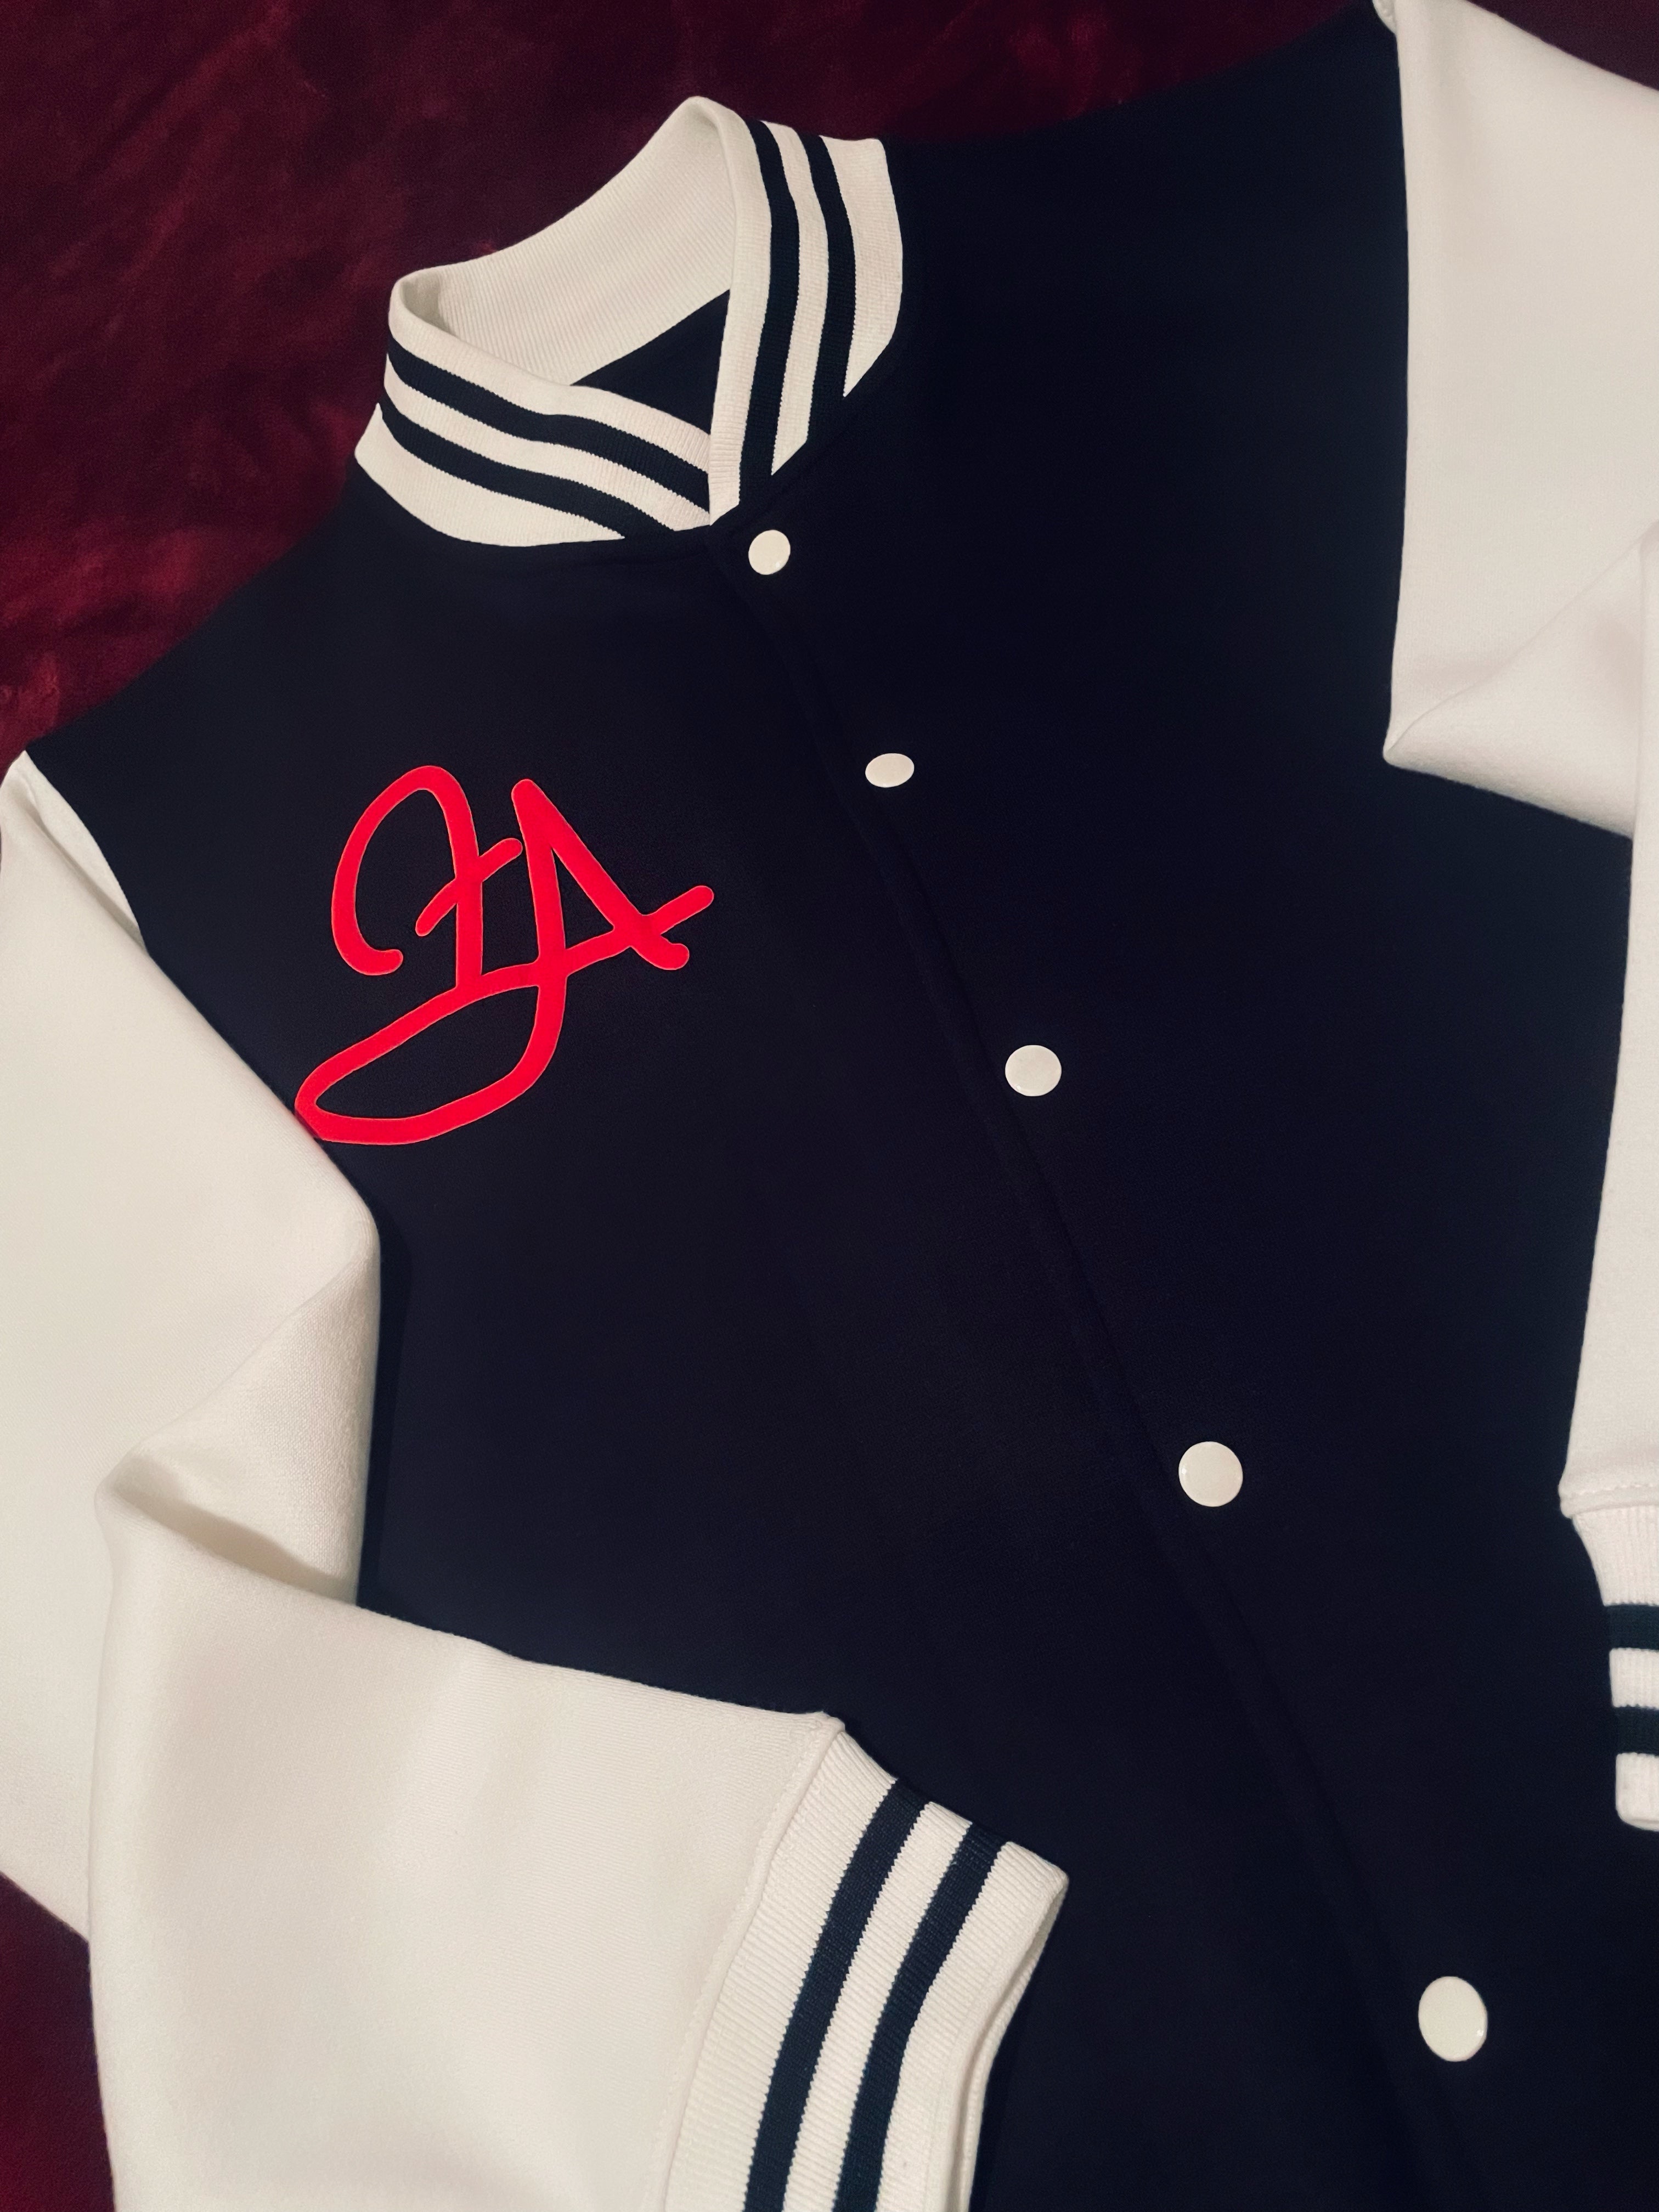 Fallon Aurielle Unisex Signature Virgo Logo & Name Zodiac Jacket Jogging Set (Black, Red & White)